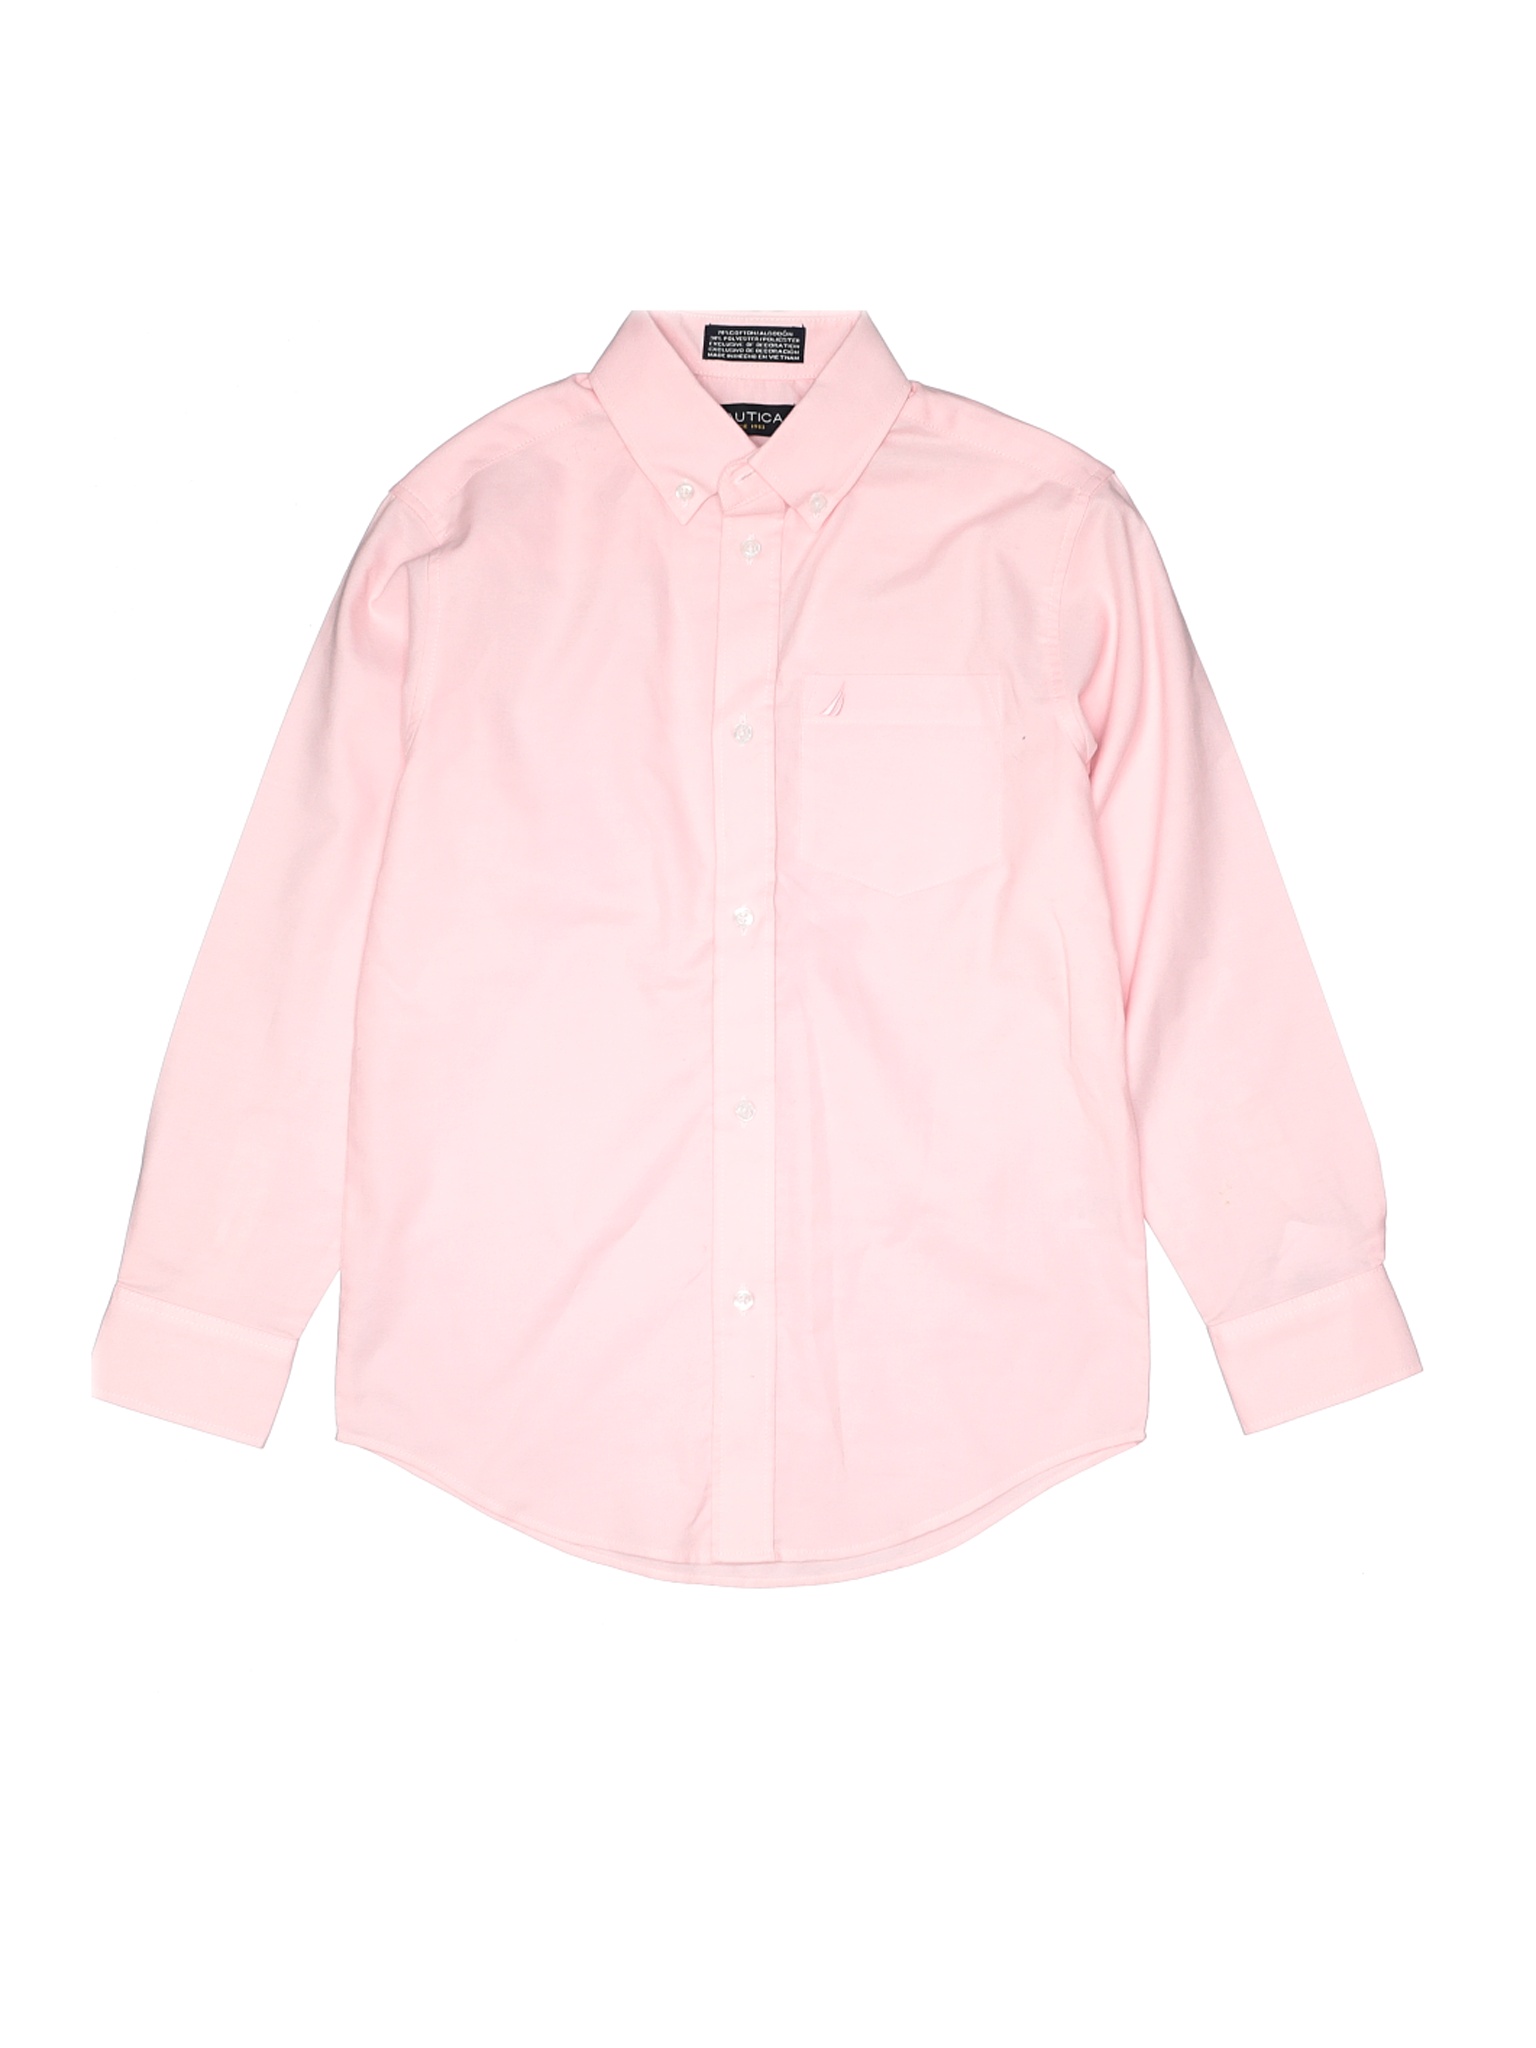 NWT Nautica Boys Pink Long Sleeve Button-Down Shirt 10 | eBay